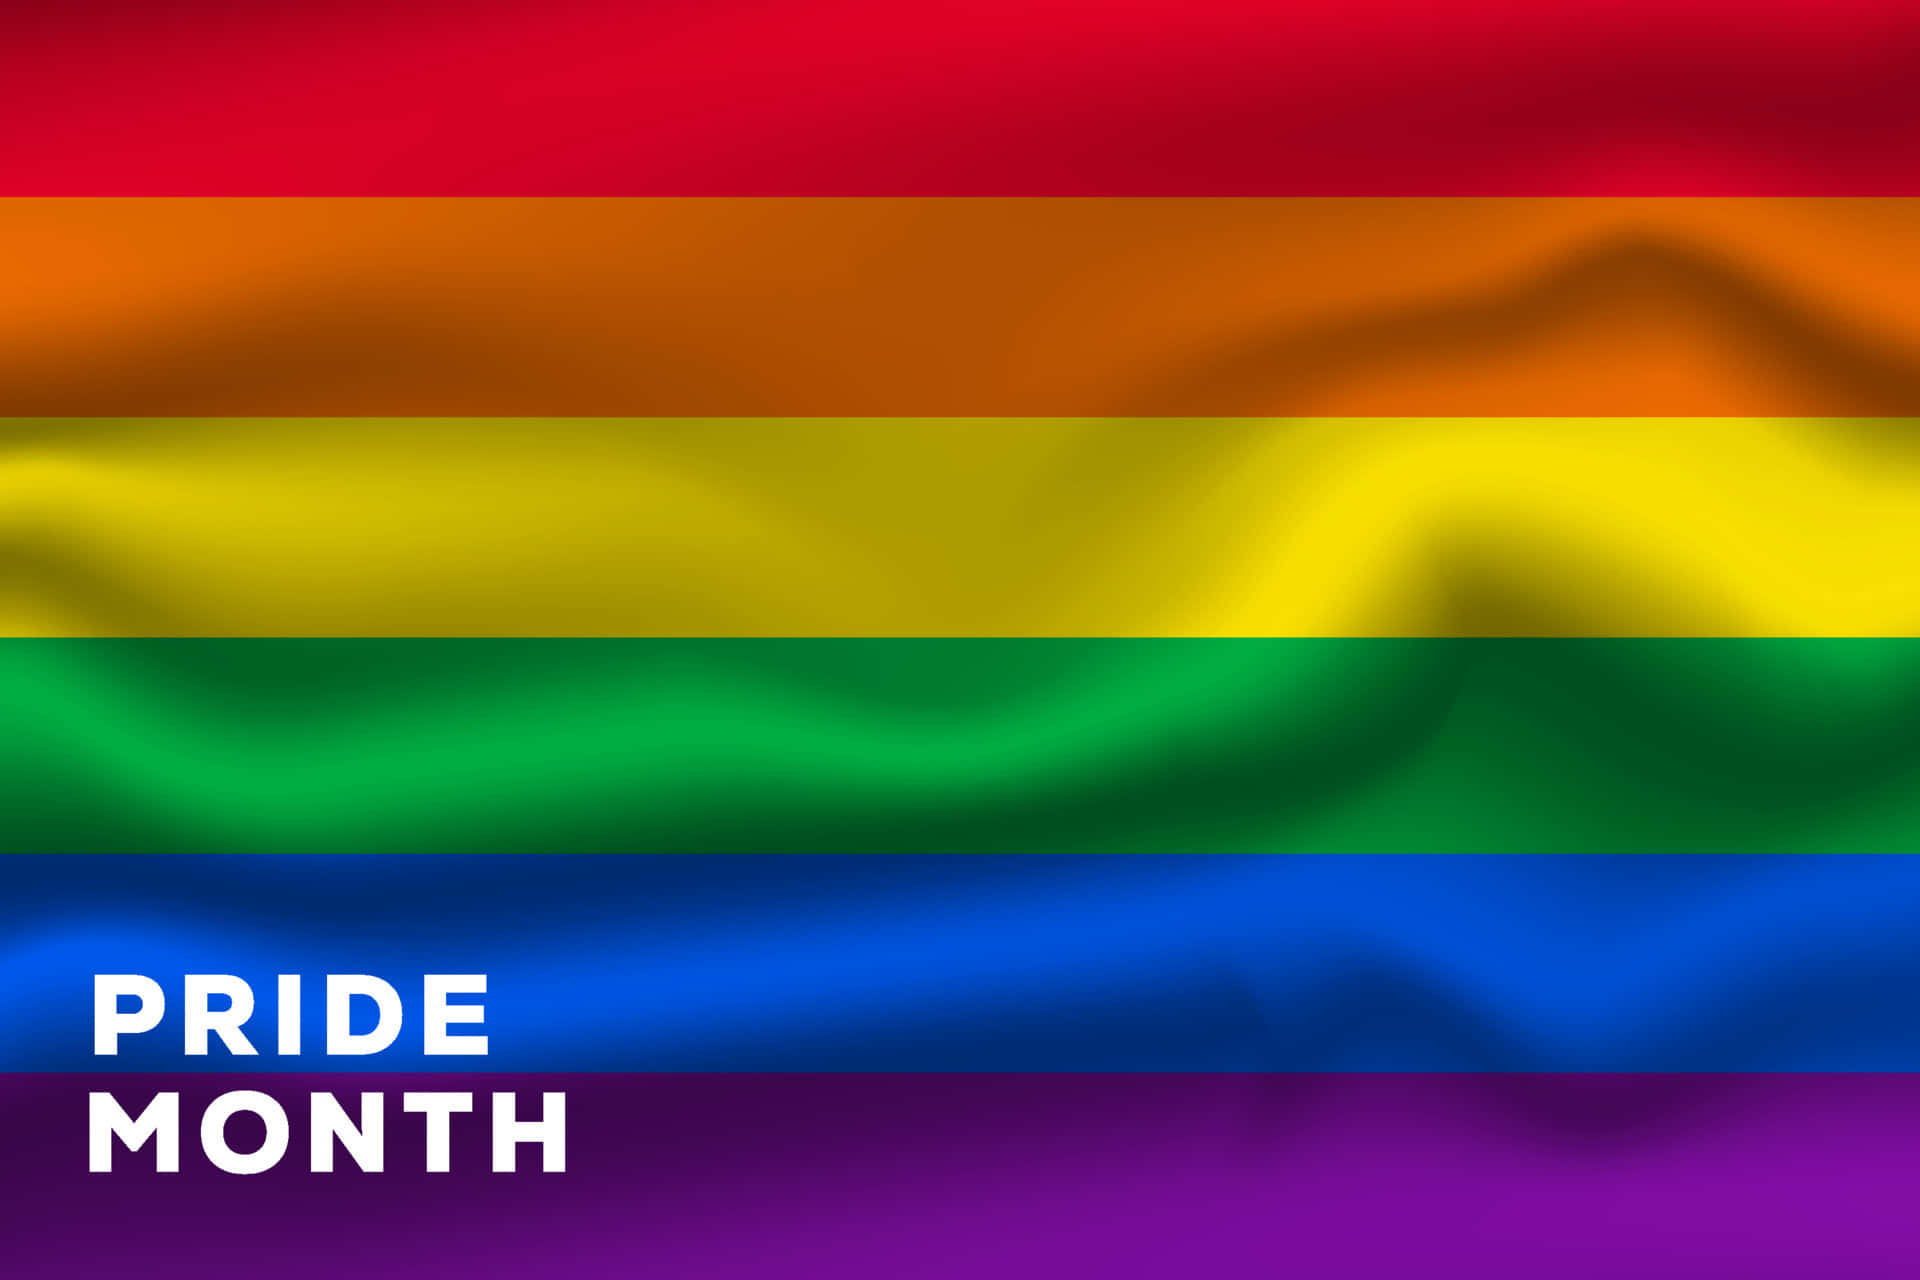 A Photorealistic Rainbow Flag for Pride